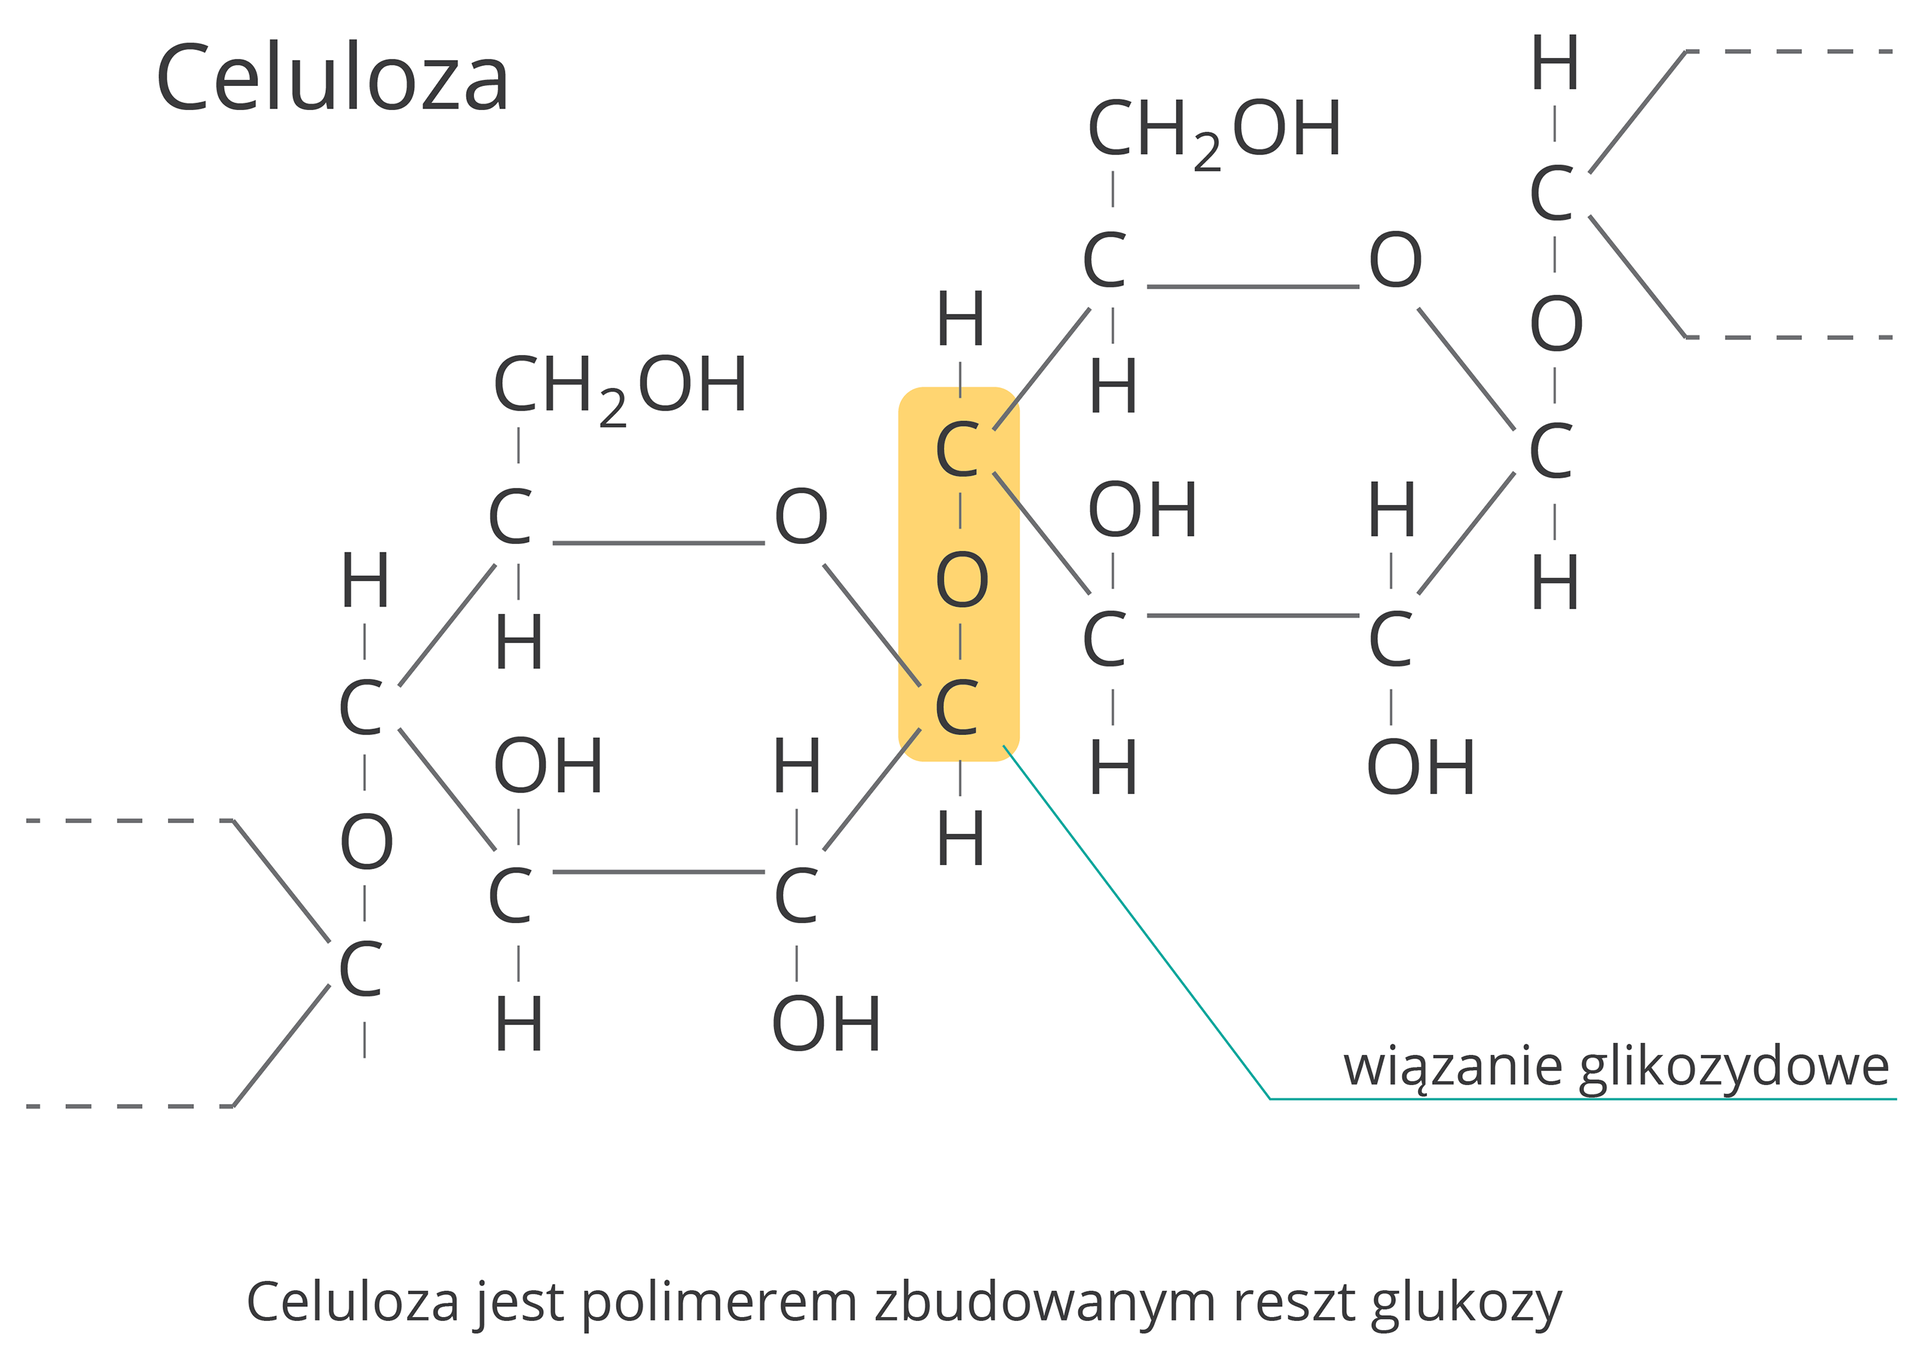 Celuloza jest polimerem zbudowanym reszt glukozy